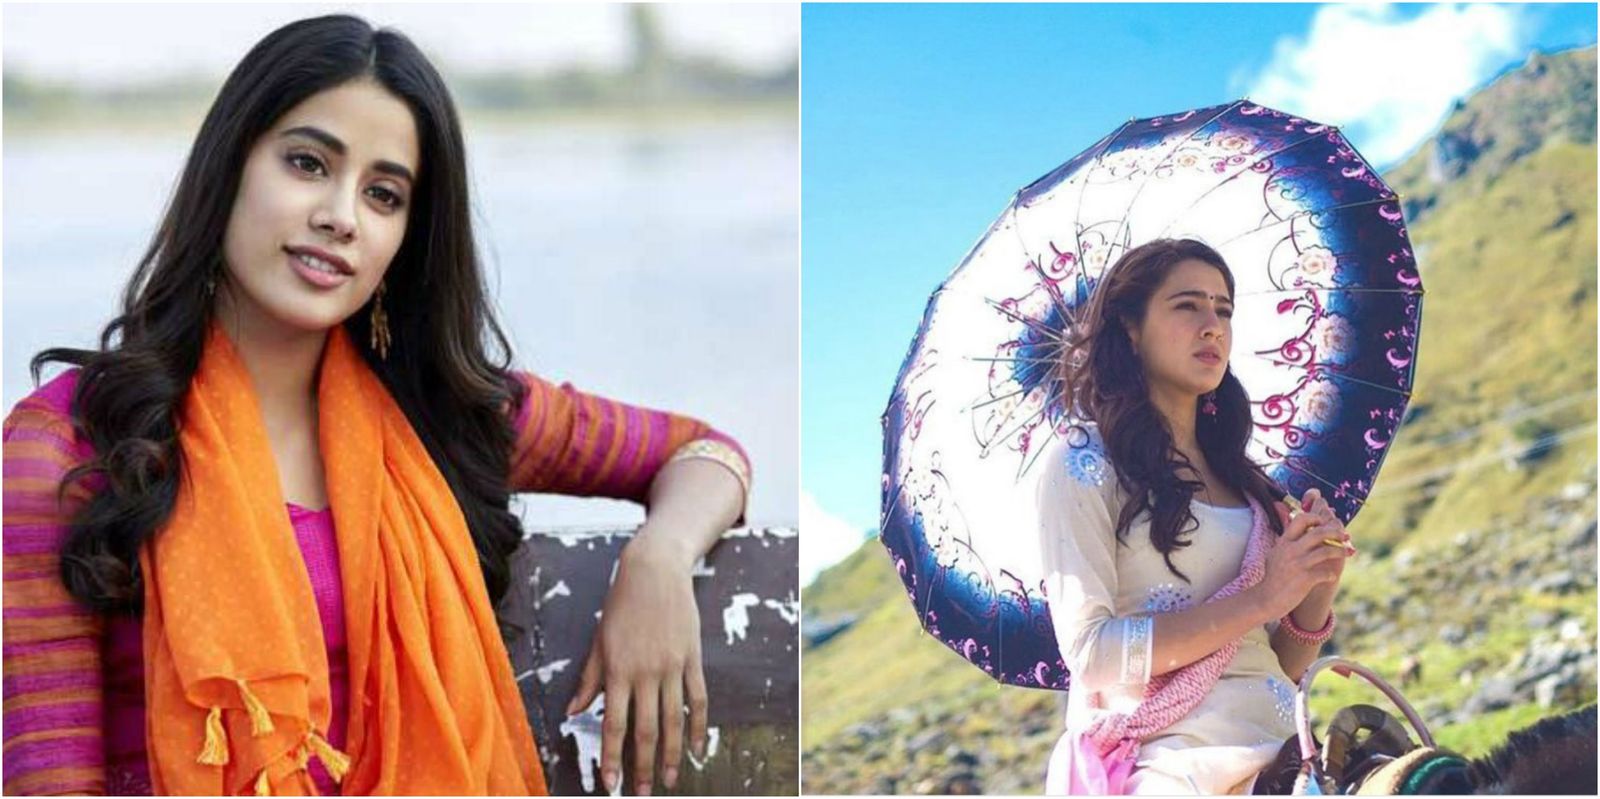 Sara Ali Khan v/s Janhvi Kapoor: Who Is The Most Sensational Debutante Of 2018?